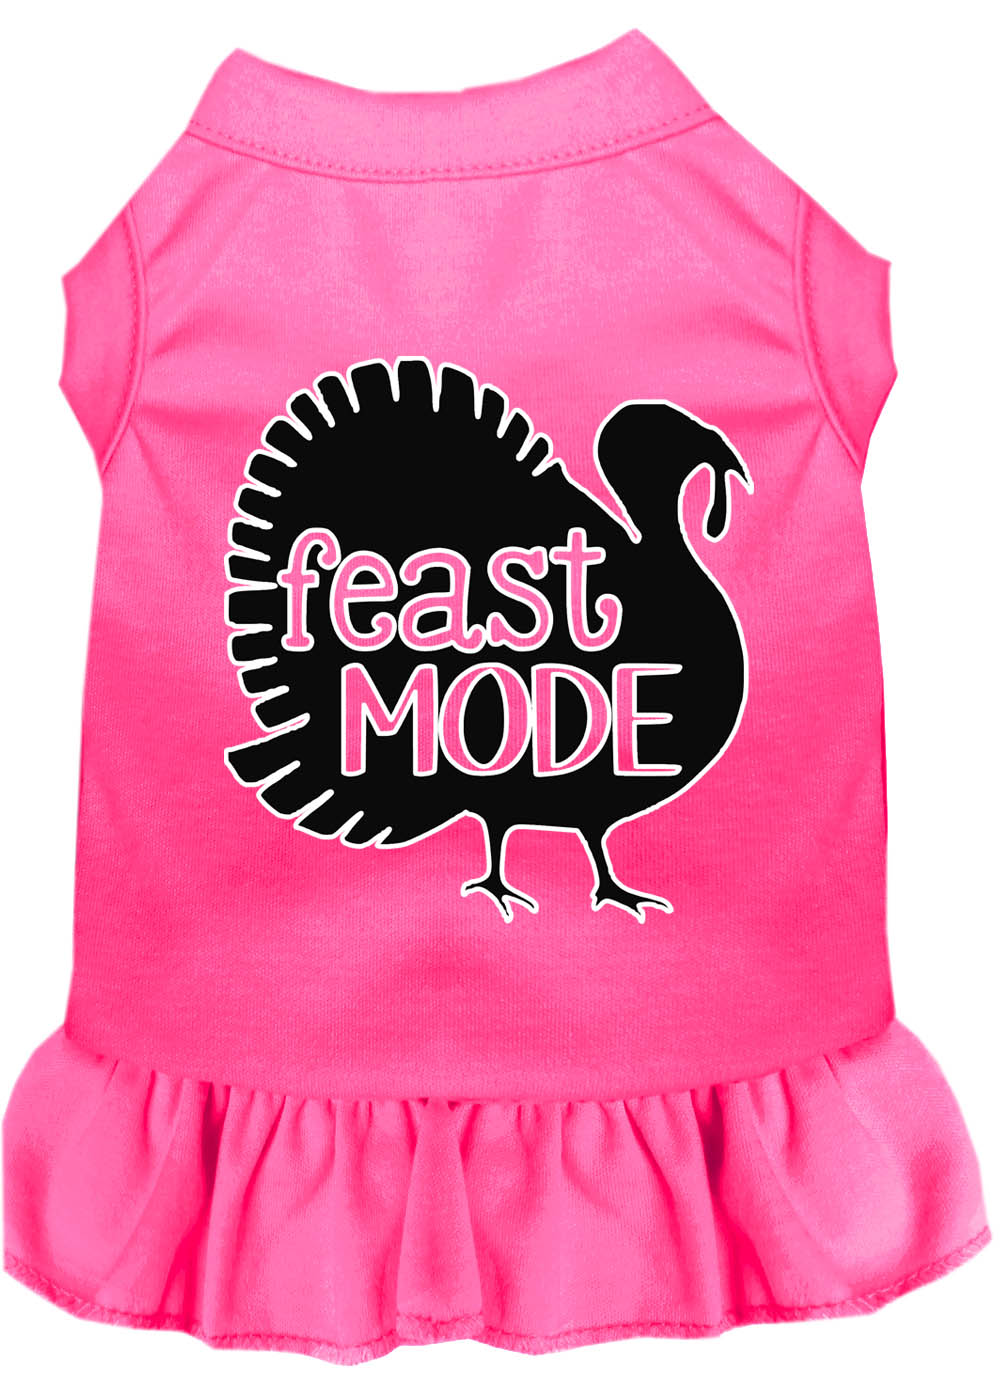 Feast Mode Screen Print Dog Dress Bright Pink Lg